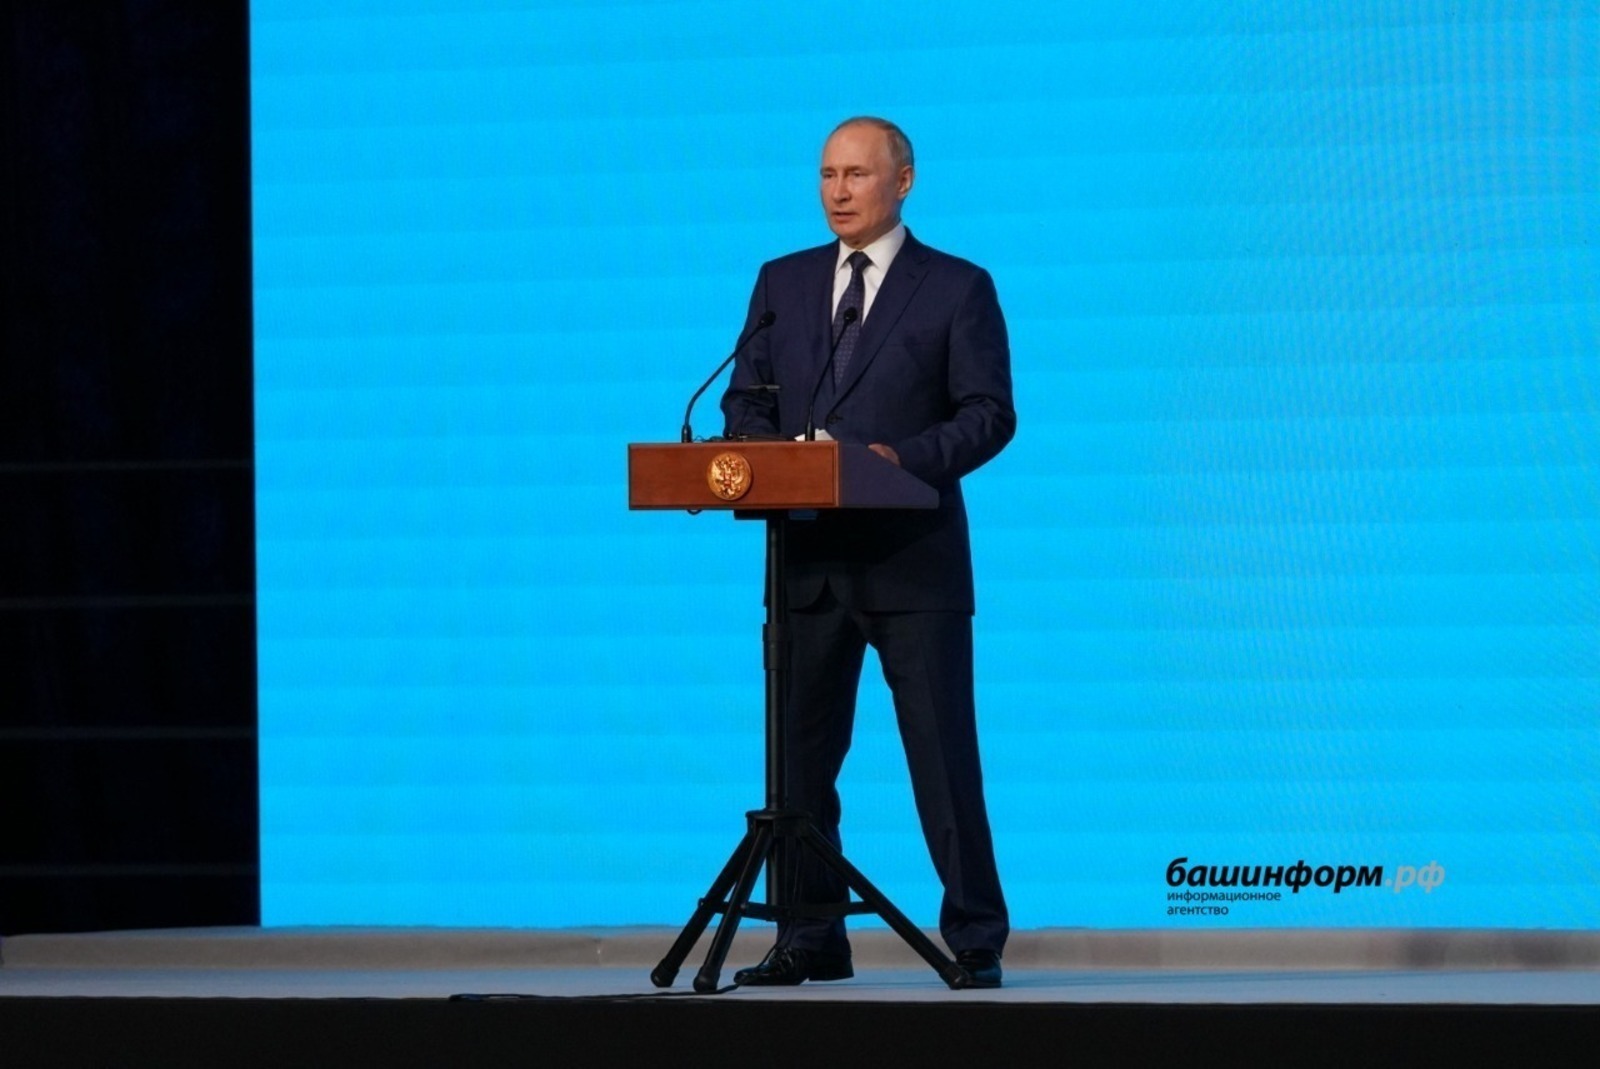 Владимир Путинға ышаныс рейтингы 81% артҡан — ВЦИОМ